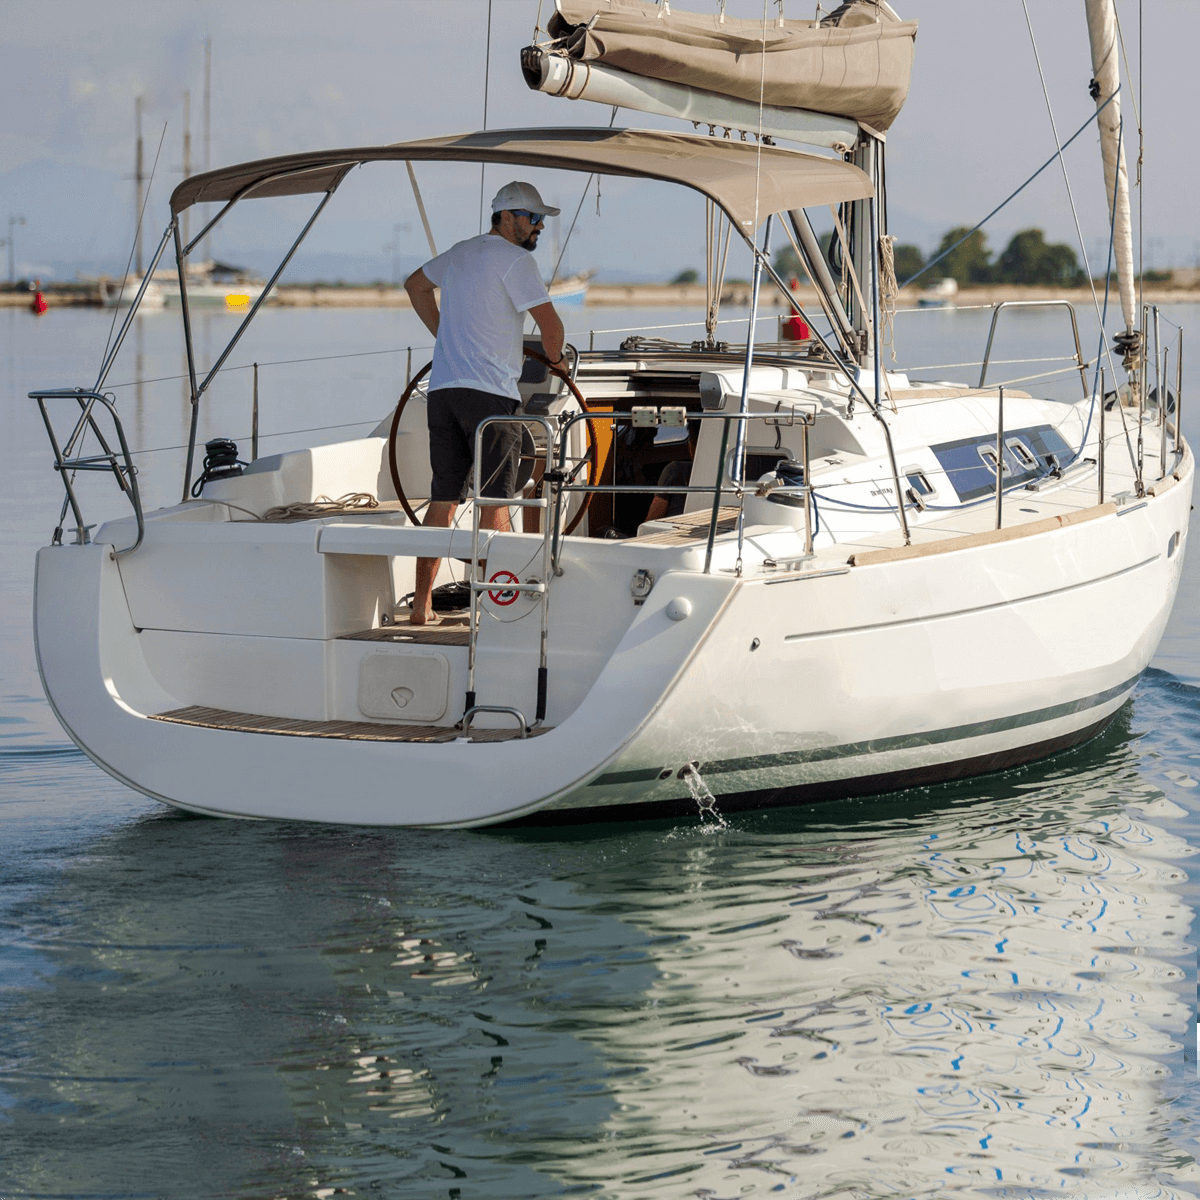 bimini top on a sailboat